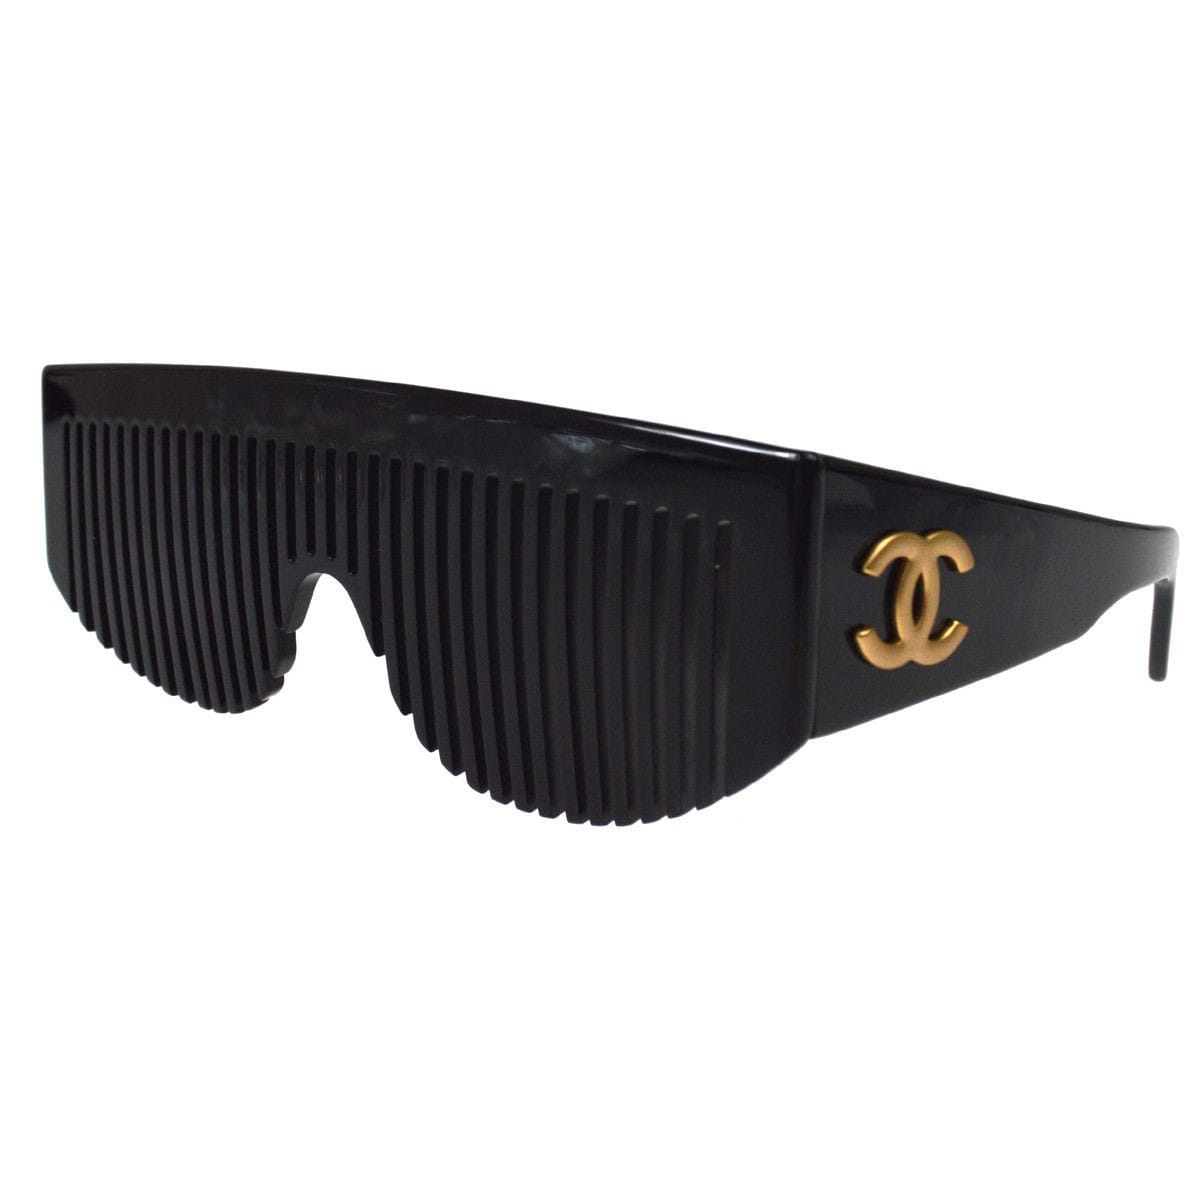 Vintage Chanel 01944 94305 Sunglasses